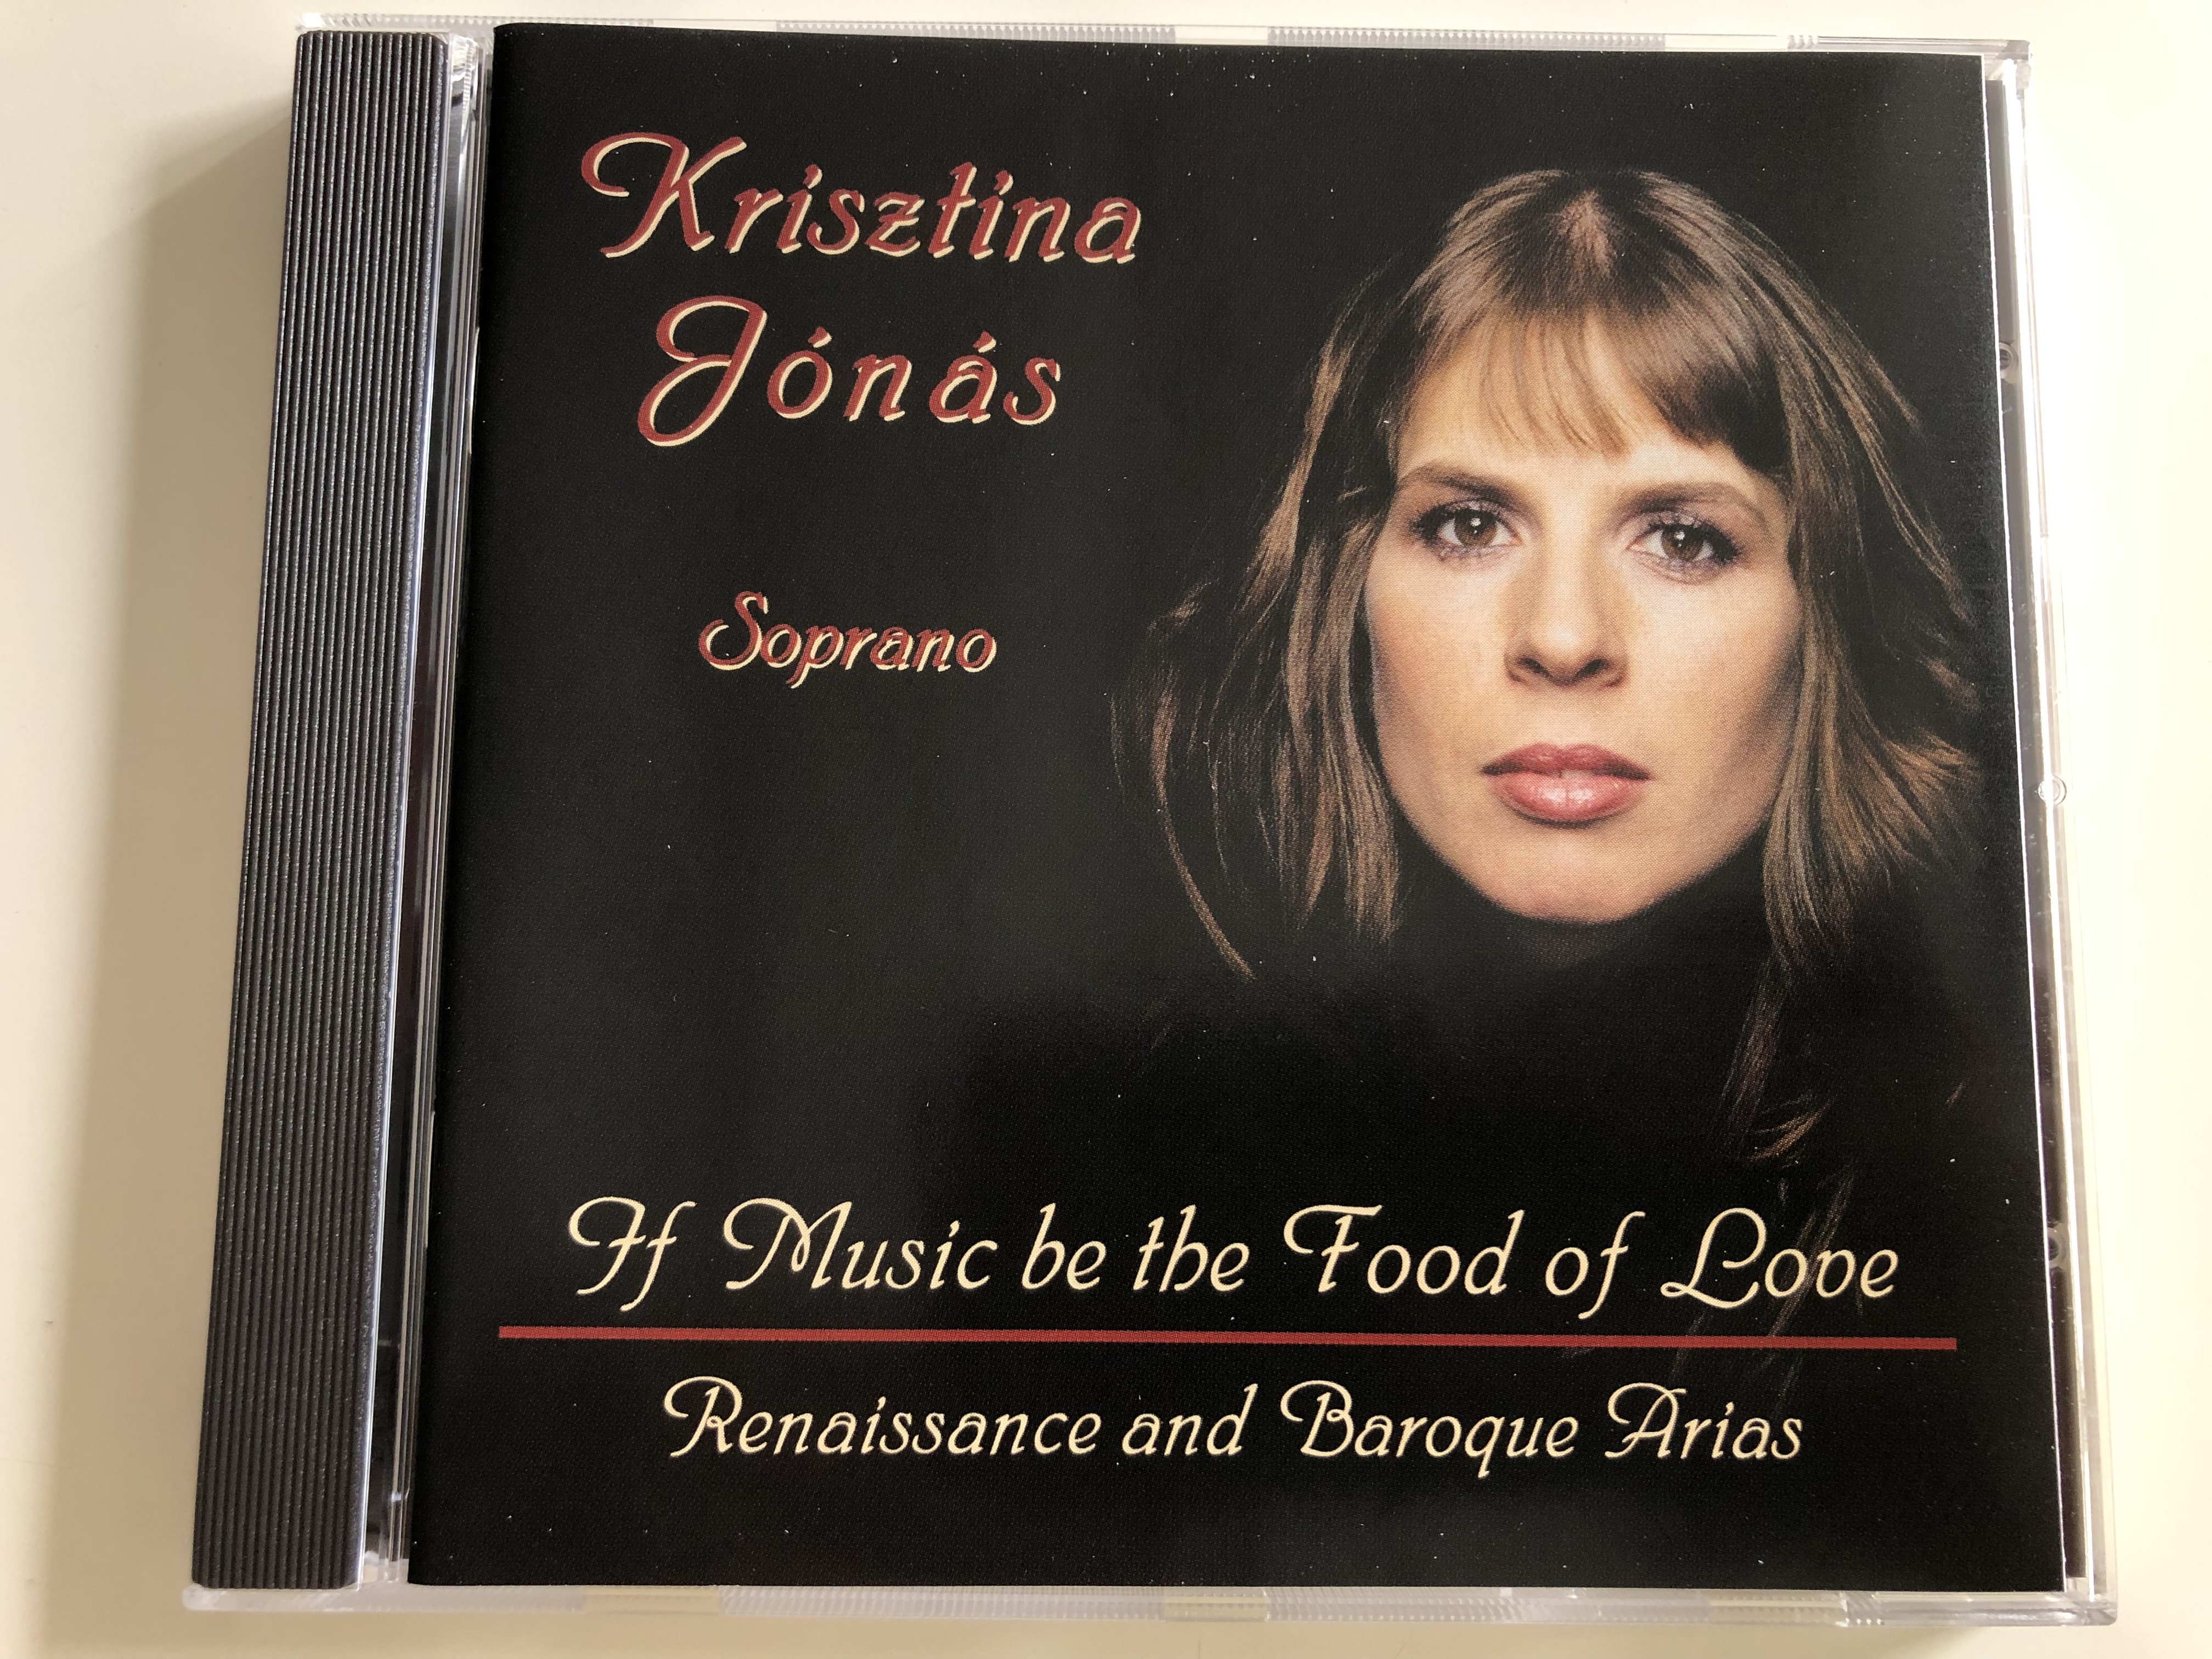 krisztina-jonas-soprano-if-music-be-the-food-of-love-renaissance-and-baroque-arias-allegro-thaler-audio-cd-2003-mza-068-1-.jpg